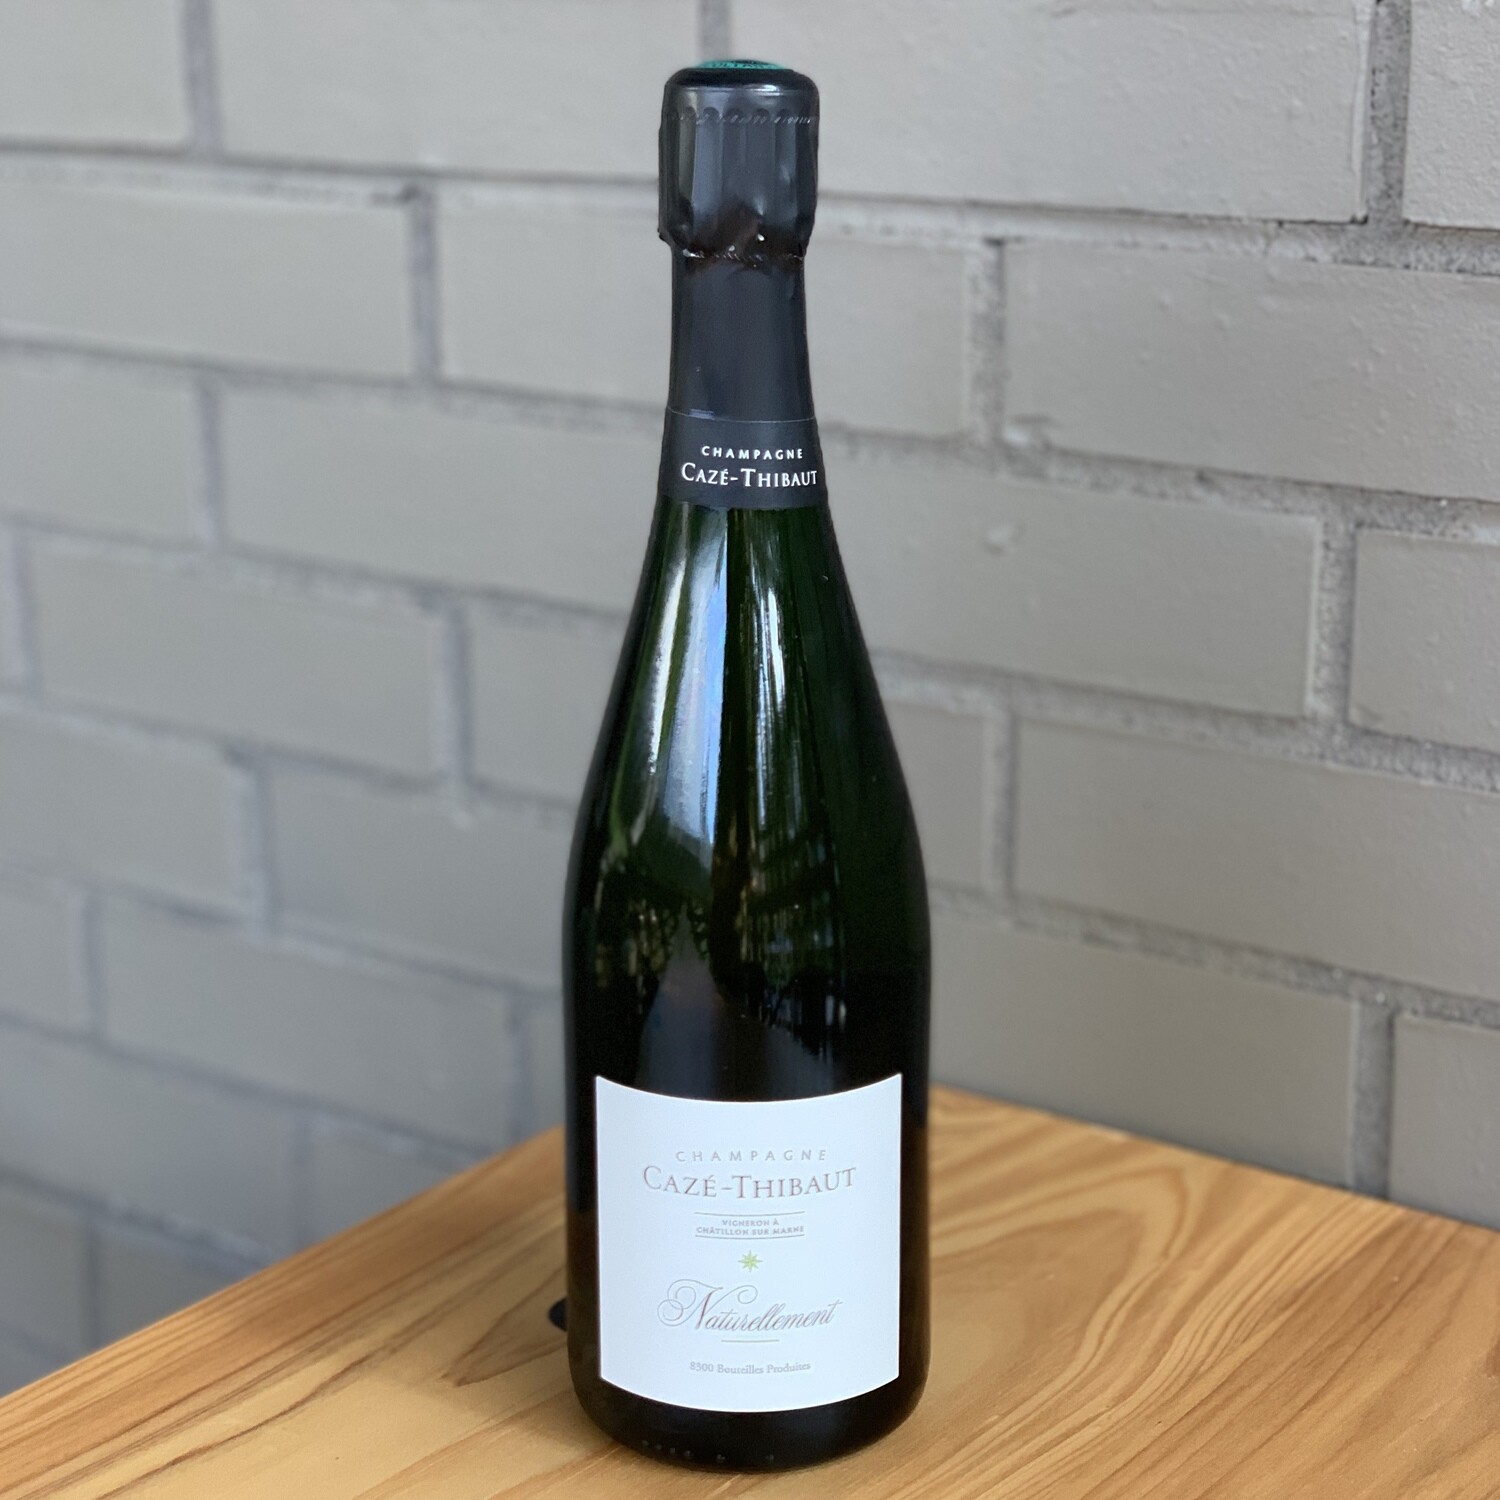 Caze-Thibaut Naturellement Champagne (750ml)